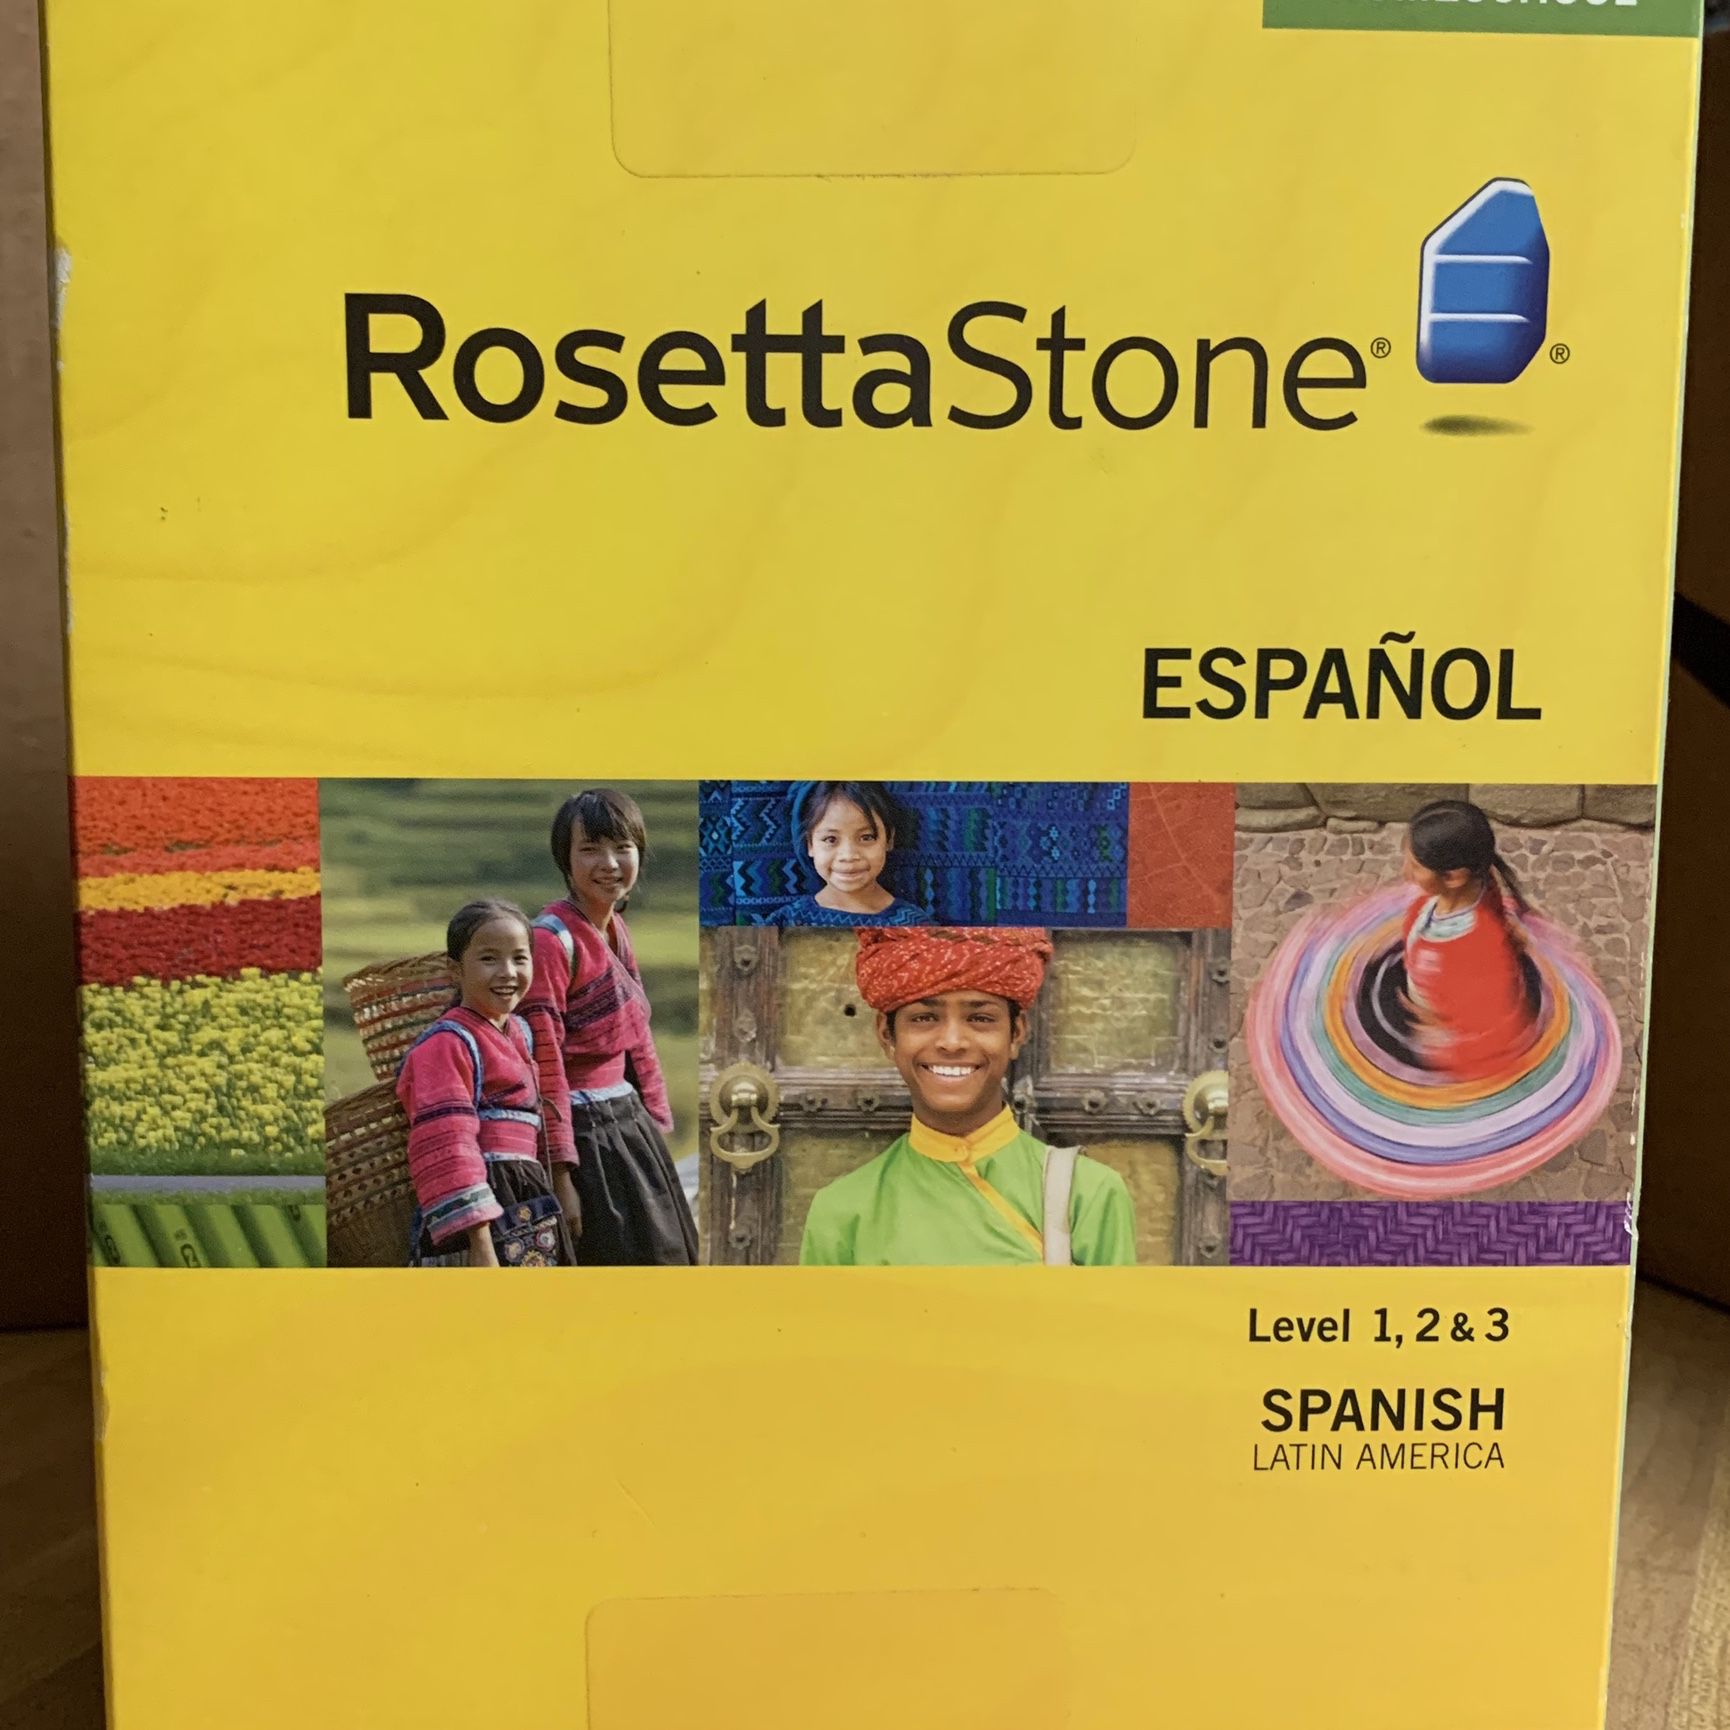 Rosetta Stone Espanol (Latin America) Level 1, 2 & 3